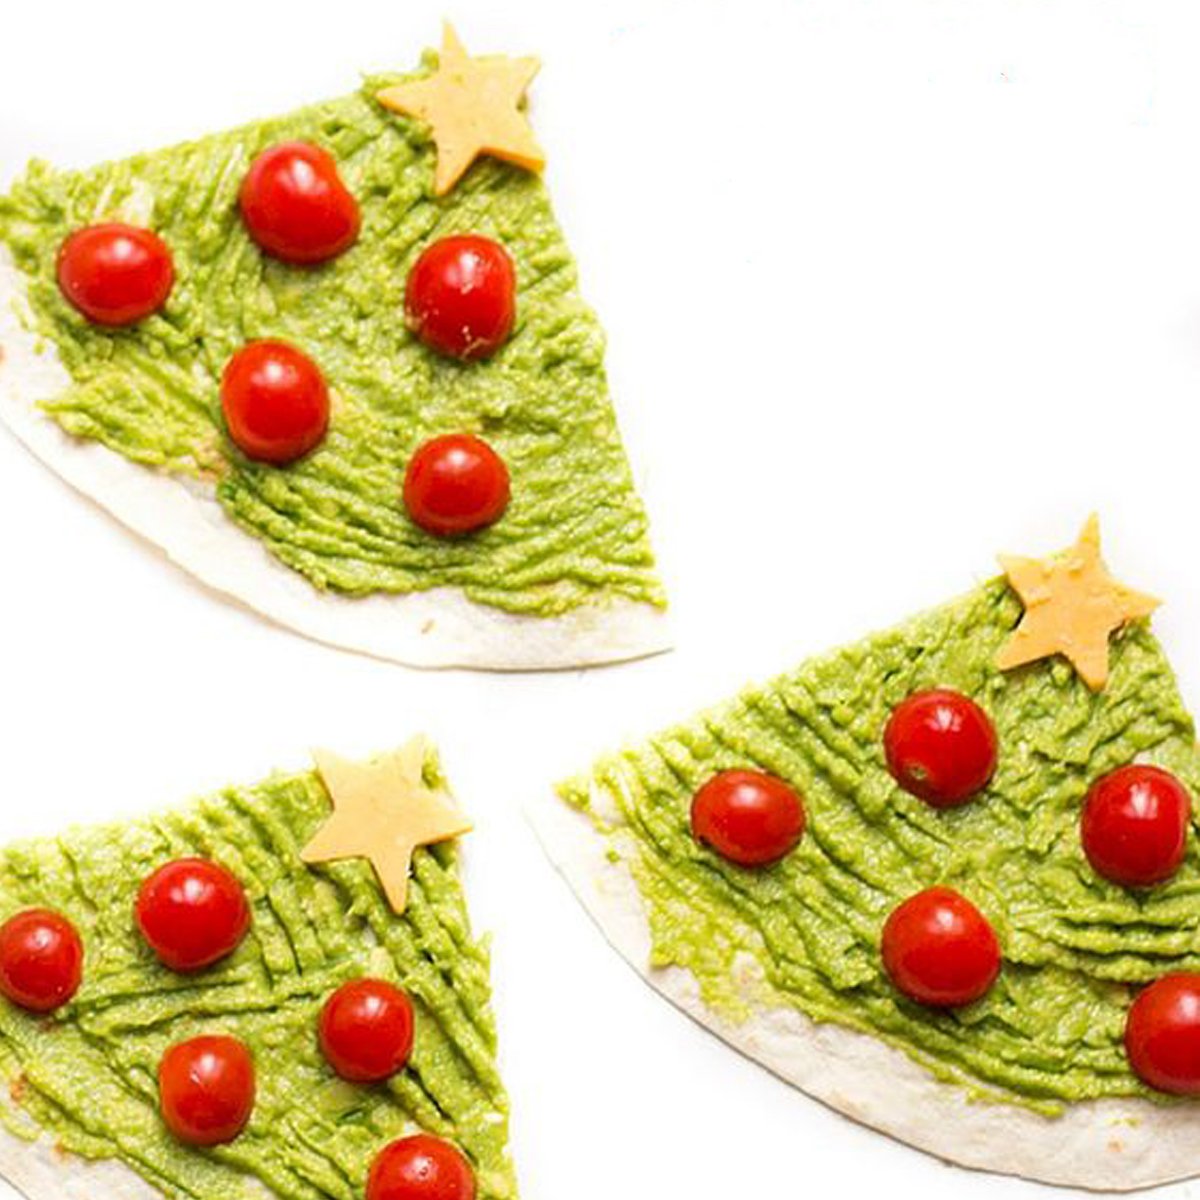 8 Fun Christmas Food Ideas for Classroom Holiday Parties | Teach Starter